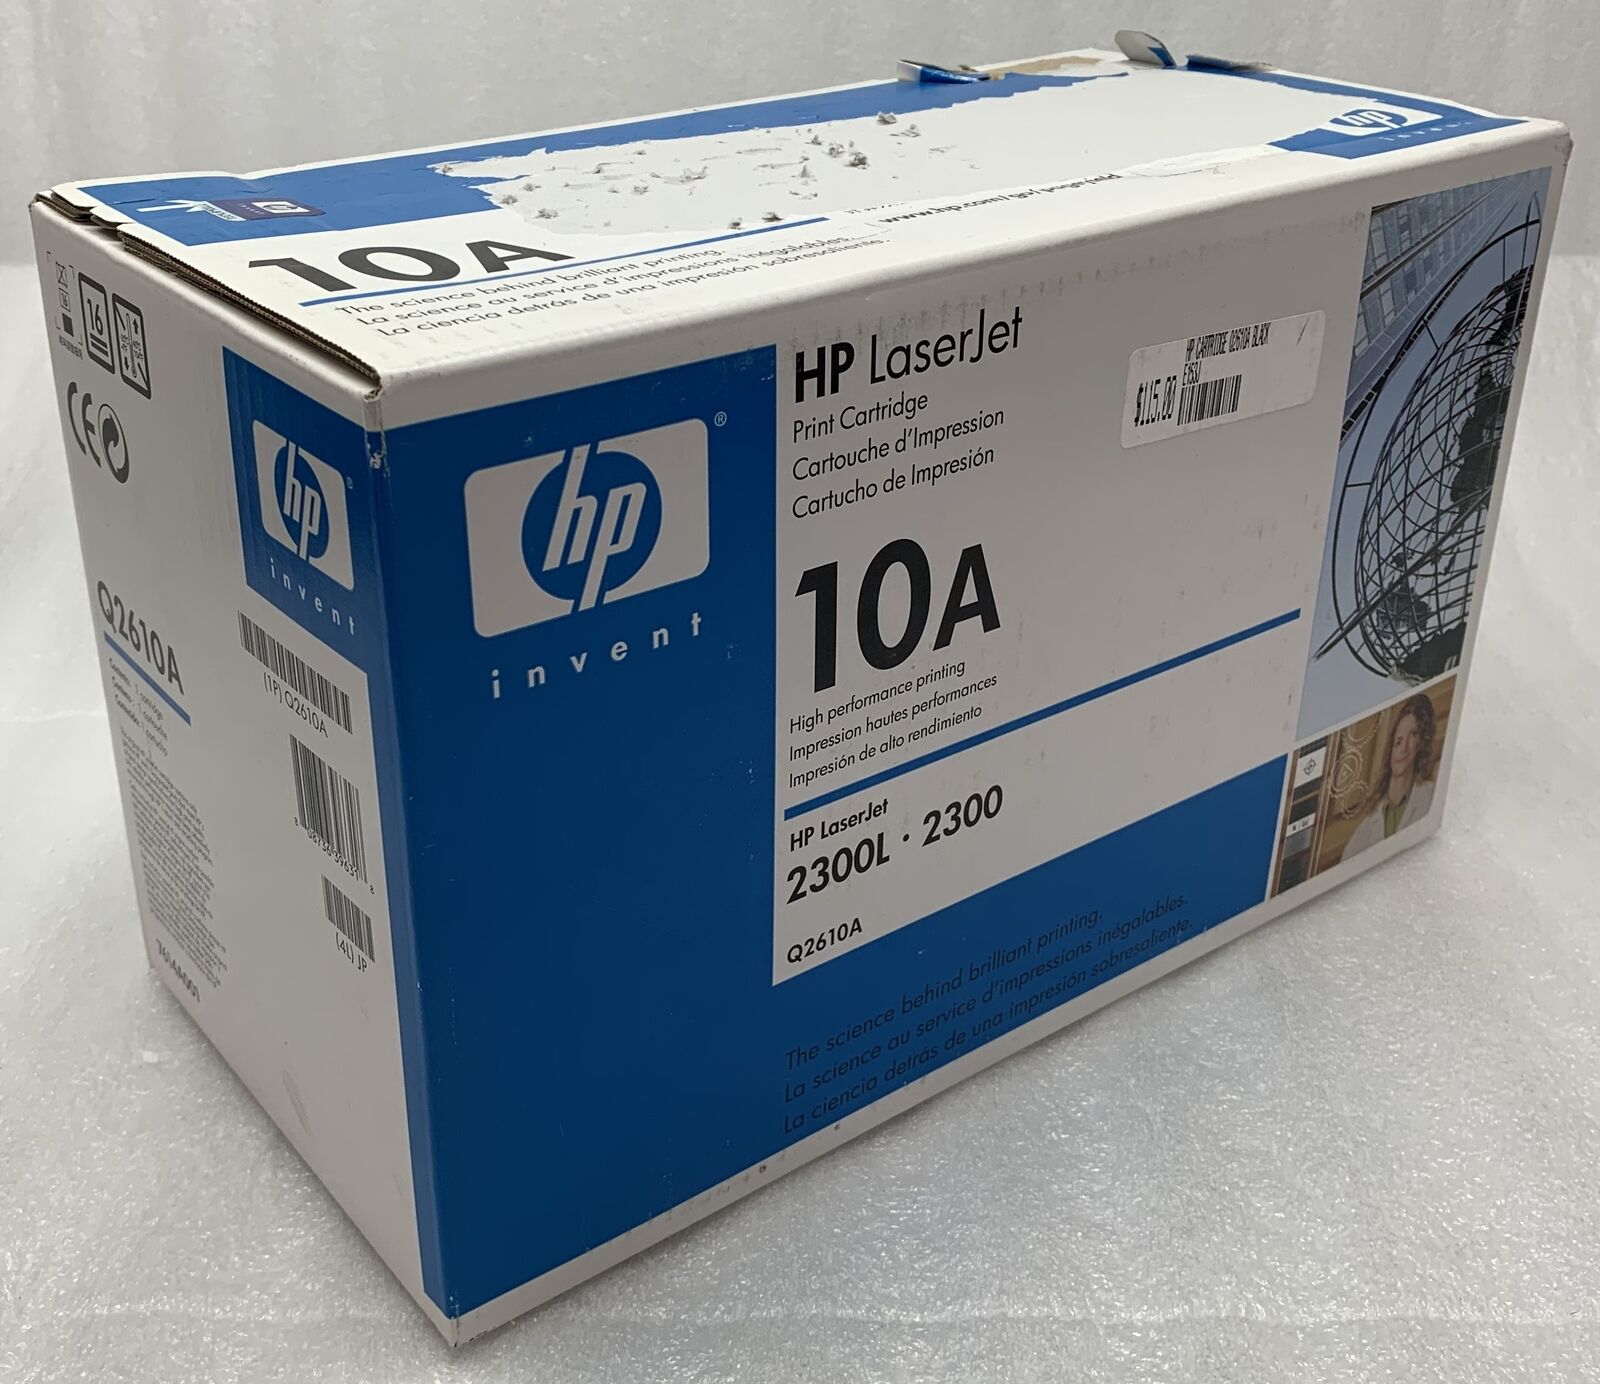 Genuine HP Laserjet 10A for HP LaserJet 2300L, 2300 Q2610A             